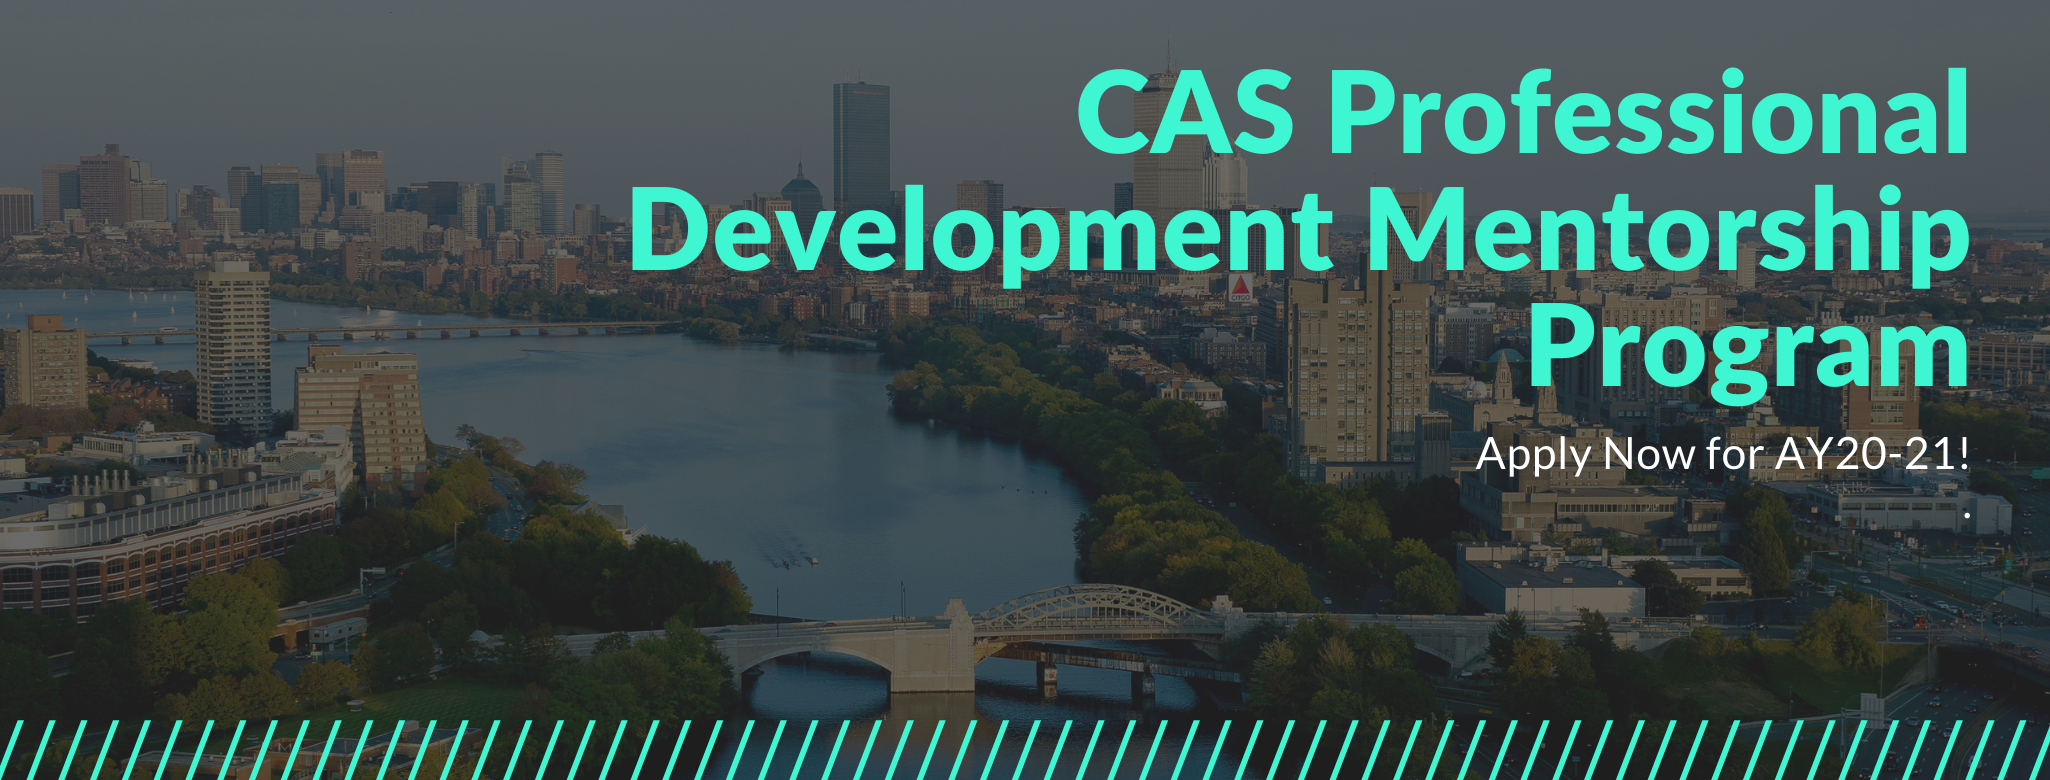 CAS Professional Development Mentorship Program_AY20-21